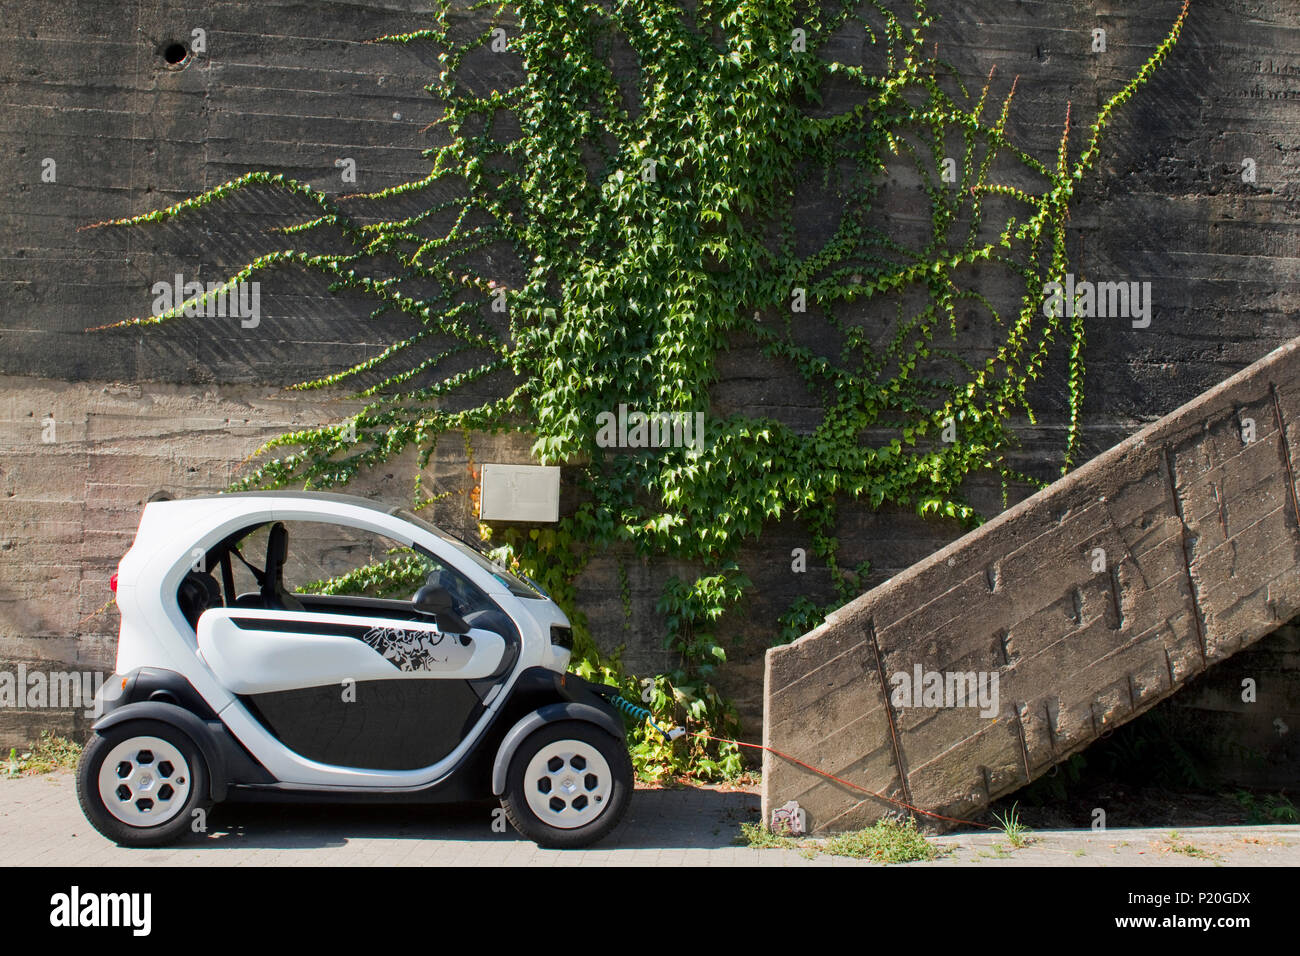 France, Nantes, electric car charging batteries Stock Photo - Alamy